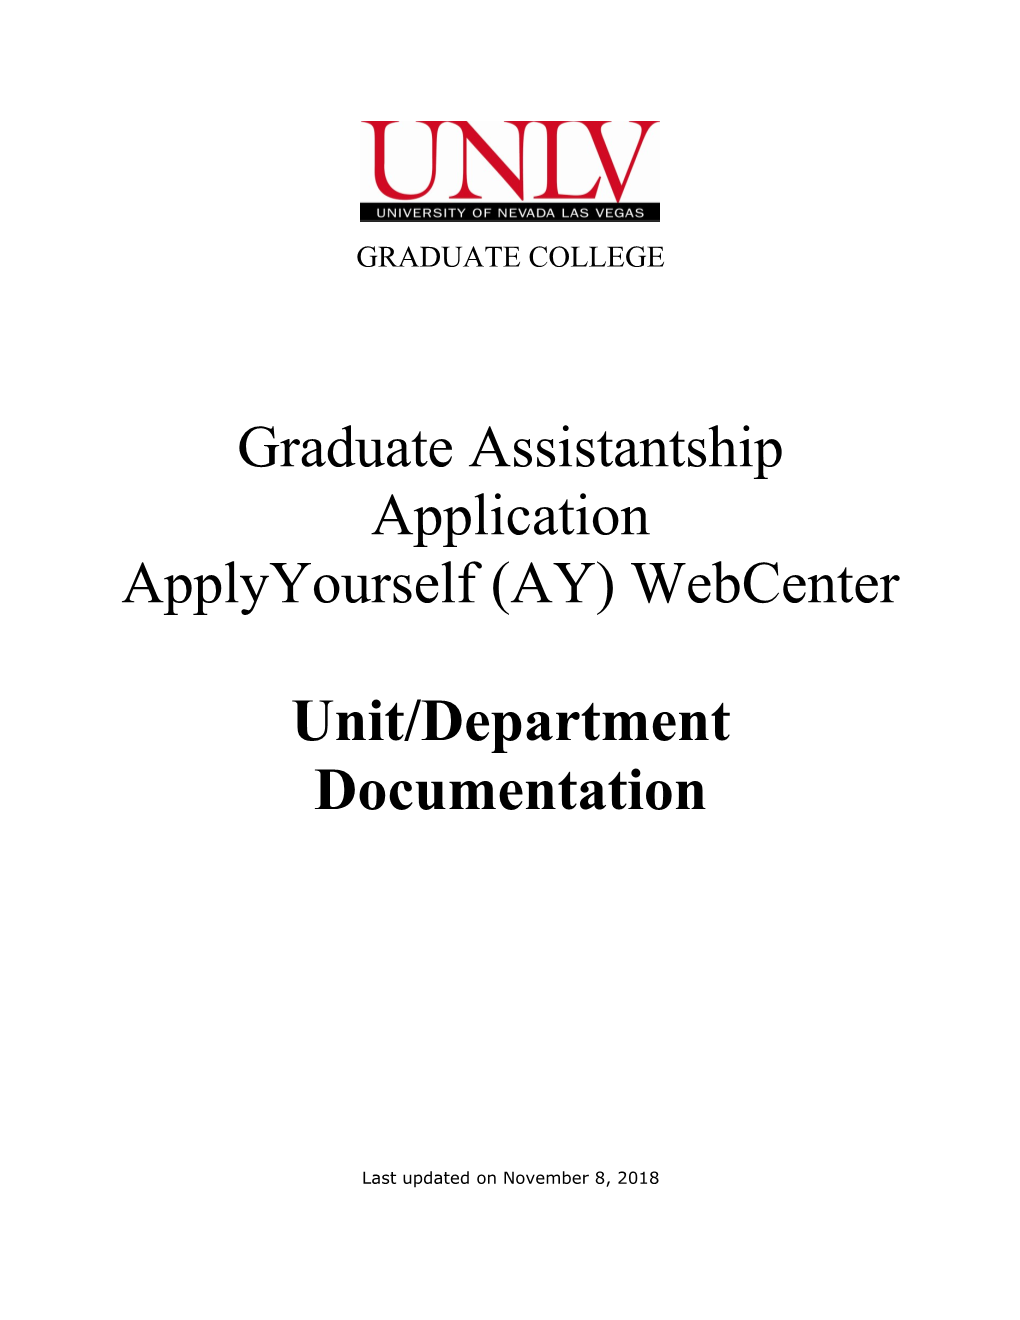 Graduate Assistantship Application